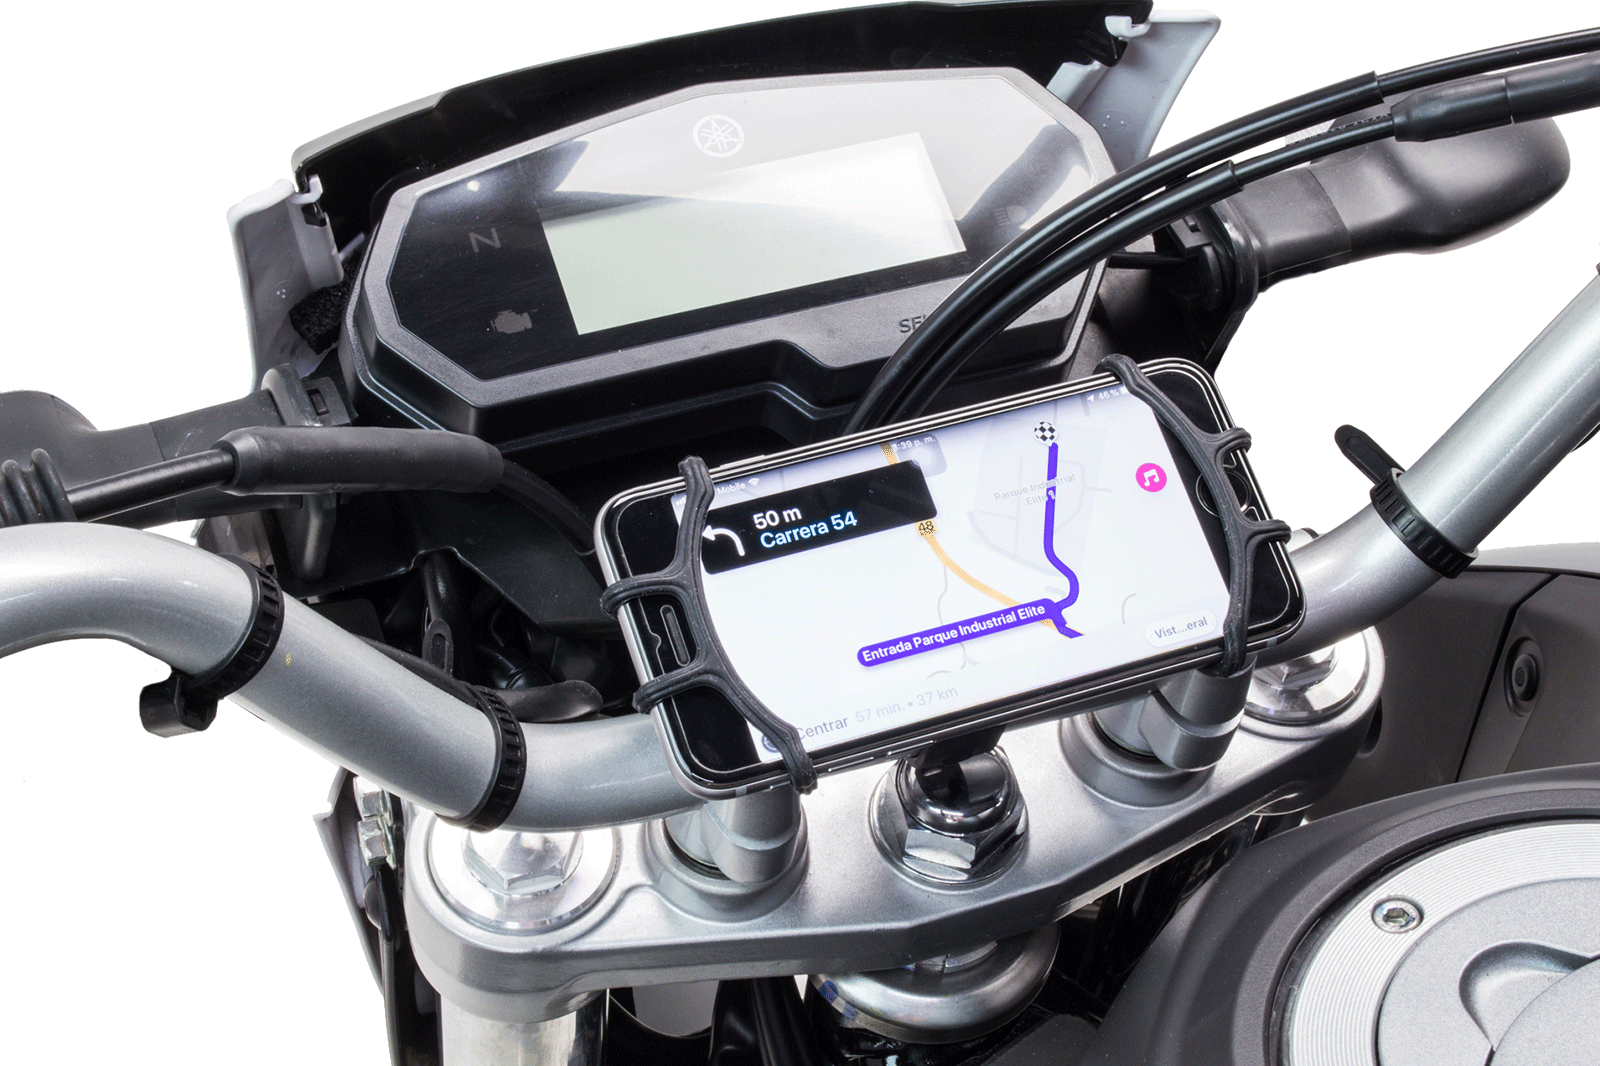 Porta Celular para Moto y Bicicleta con Rotación de 360 Grados